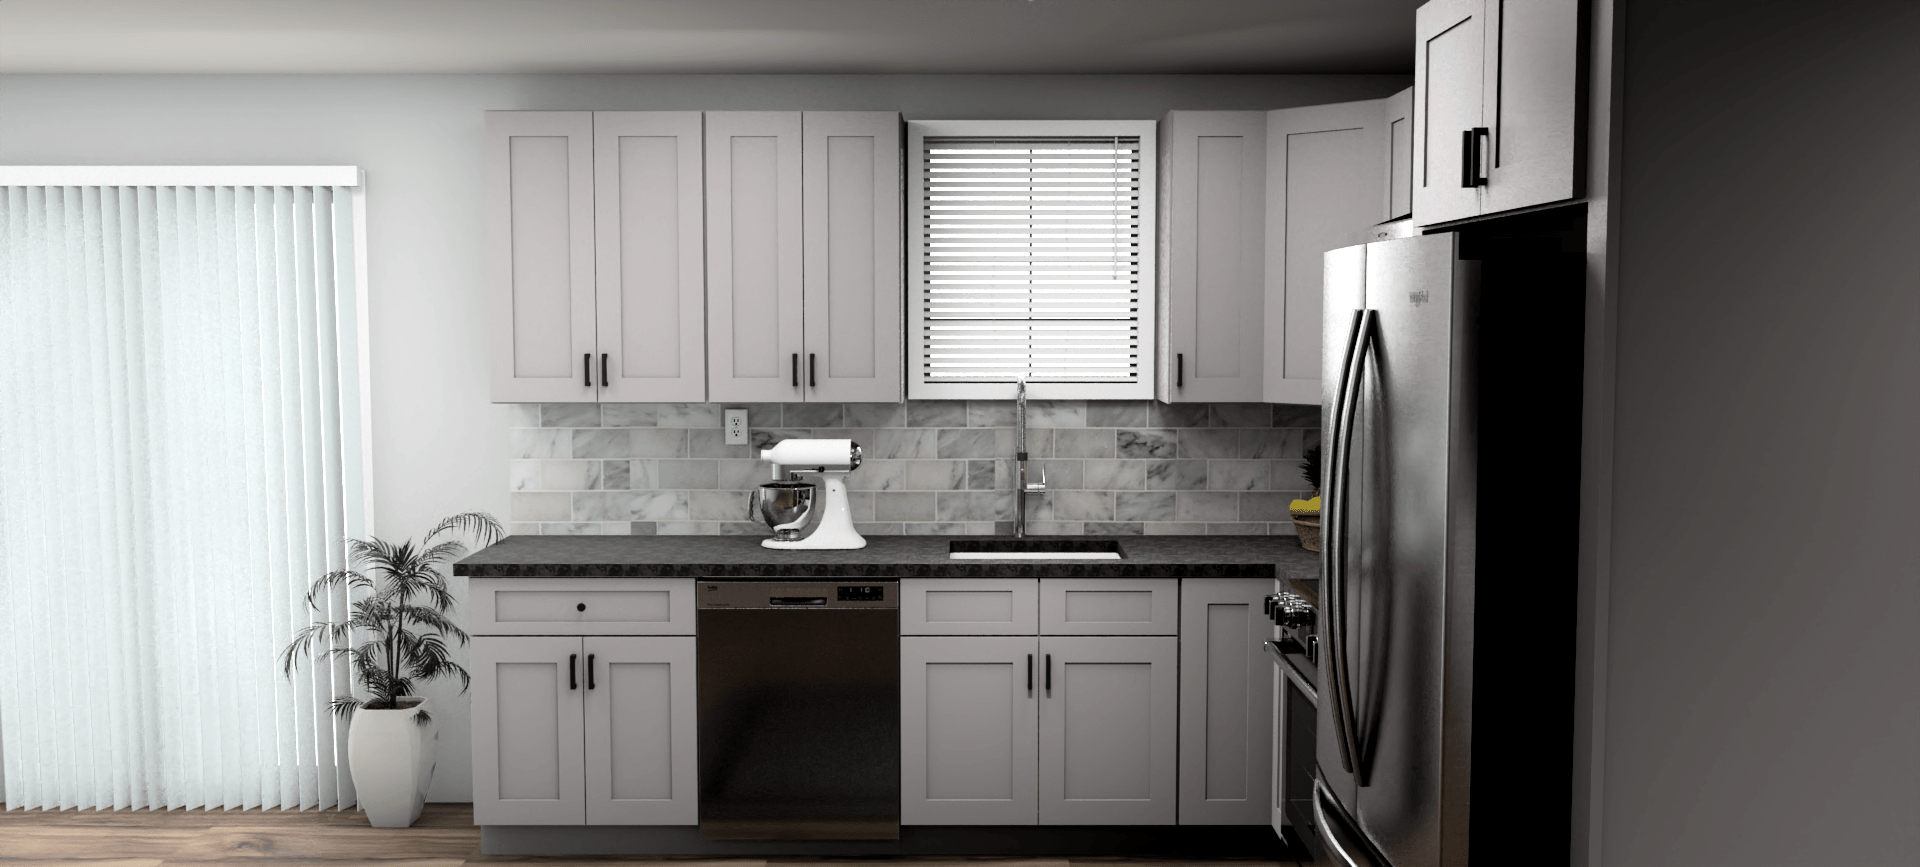 Fabuwood Allure Galaxy Nickel 10 x 10 L Shaped Kitchen Side Layout Photo